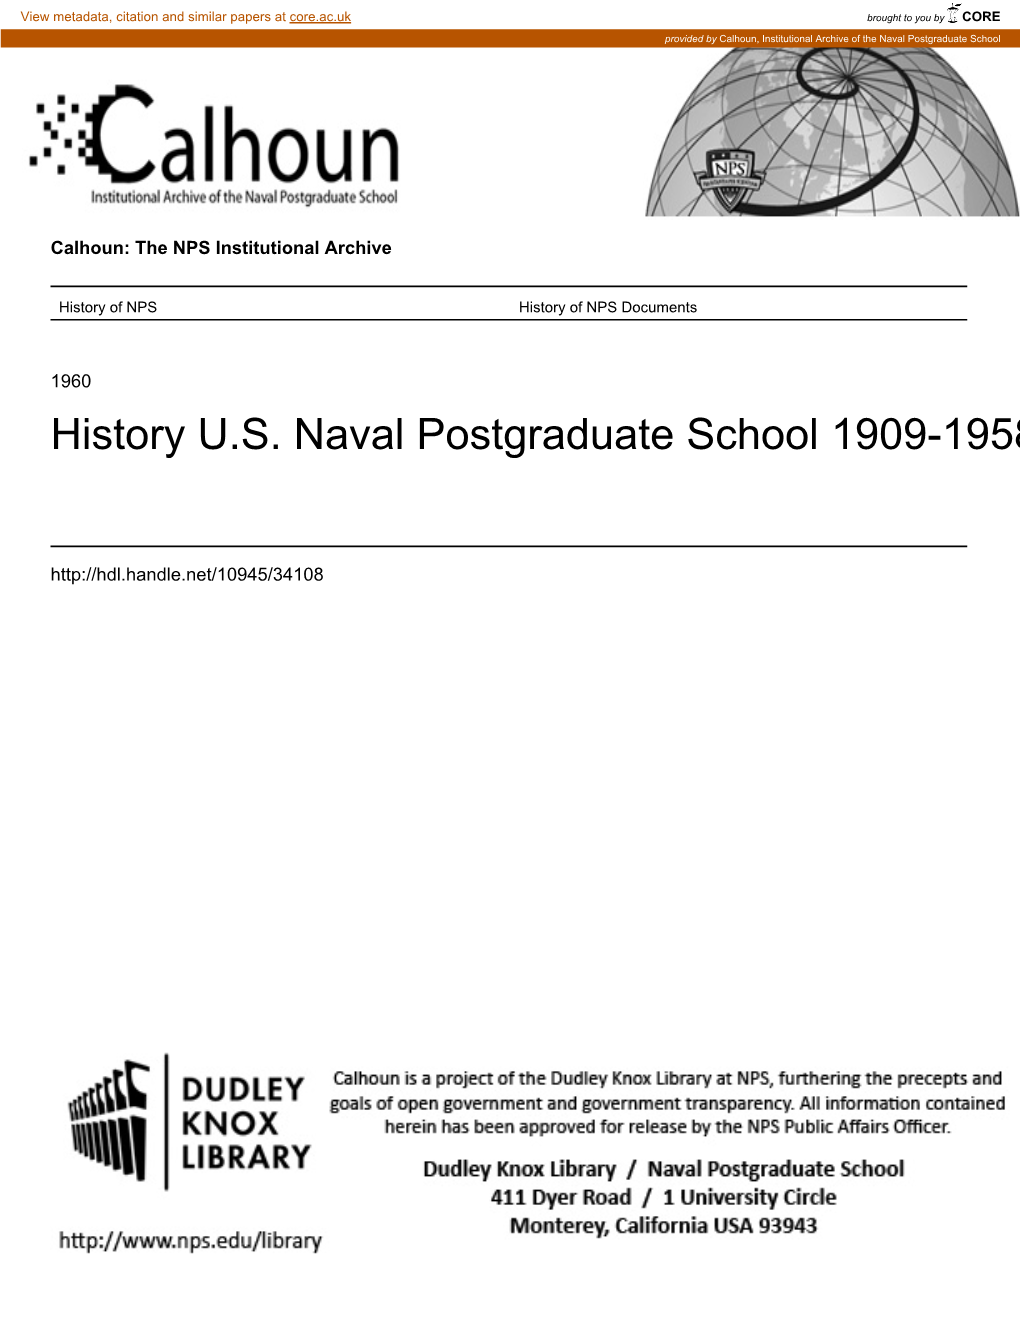 History U.S. Naval Postgraduate School 1909-1958